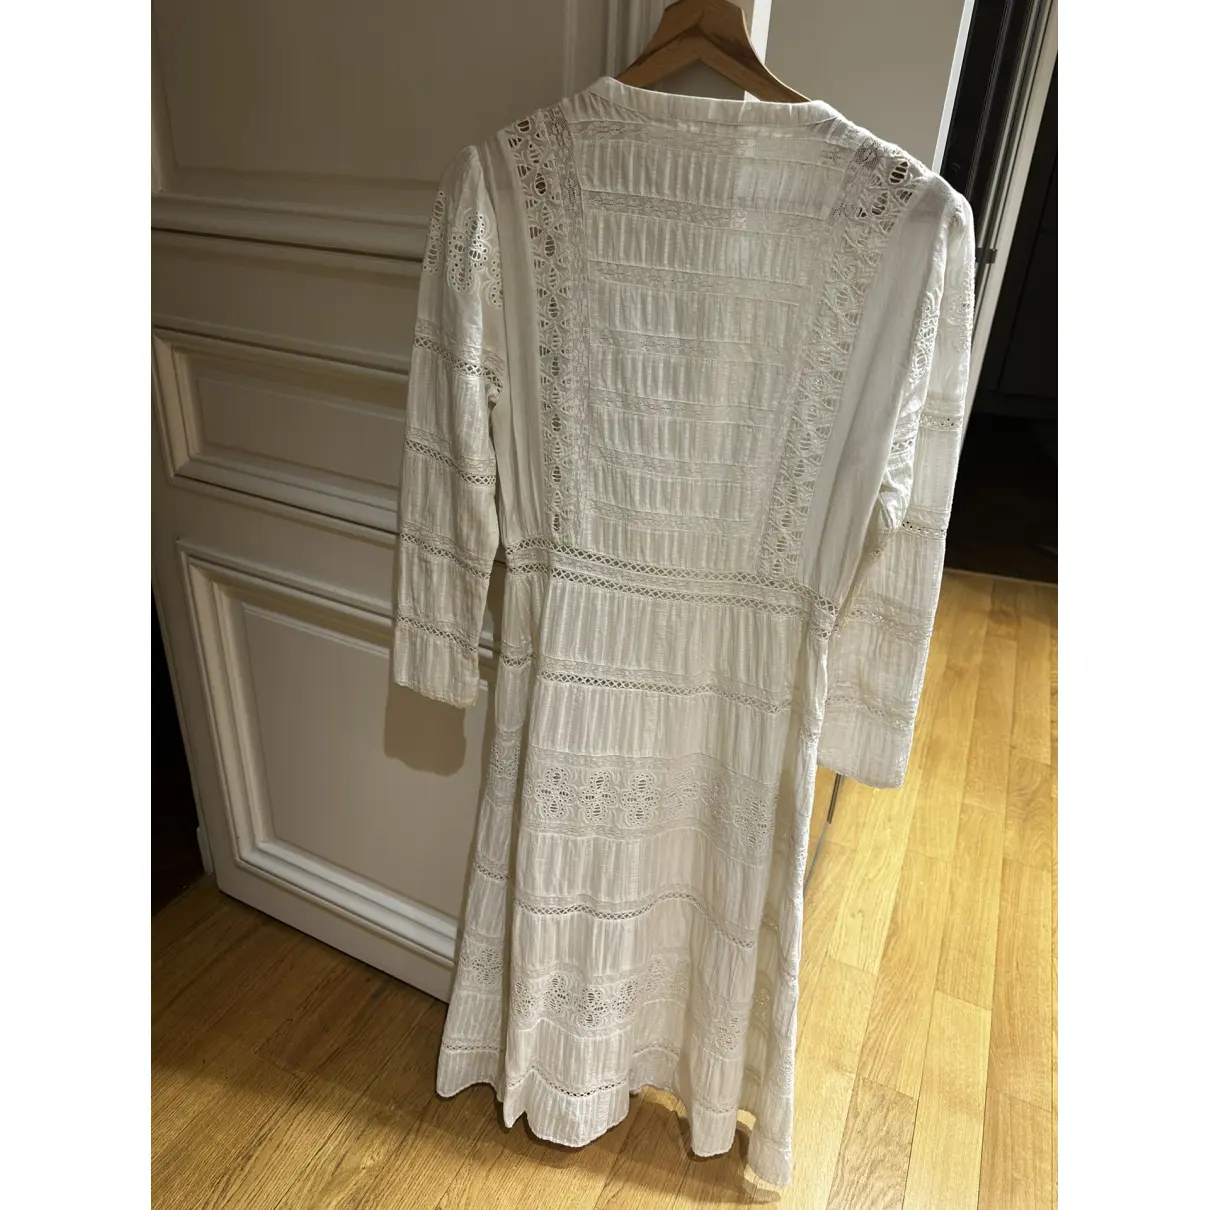 Buy Reformation Mid-length dress online